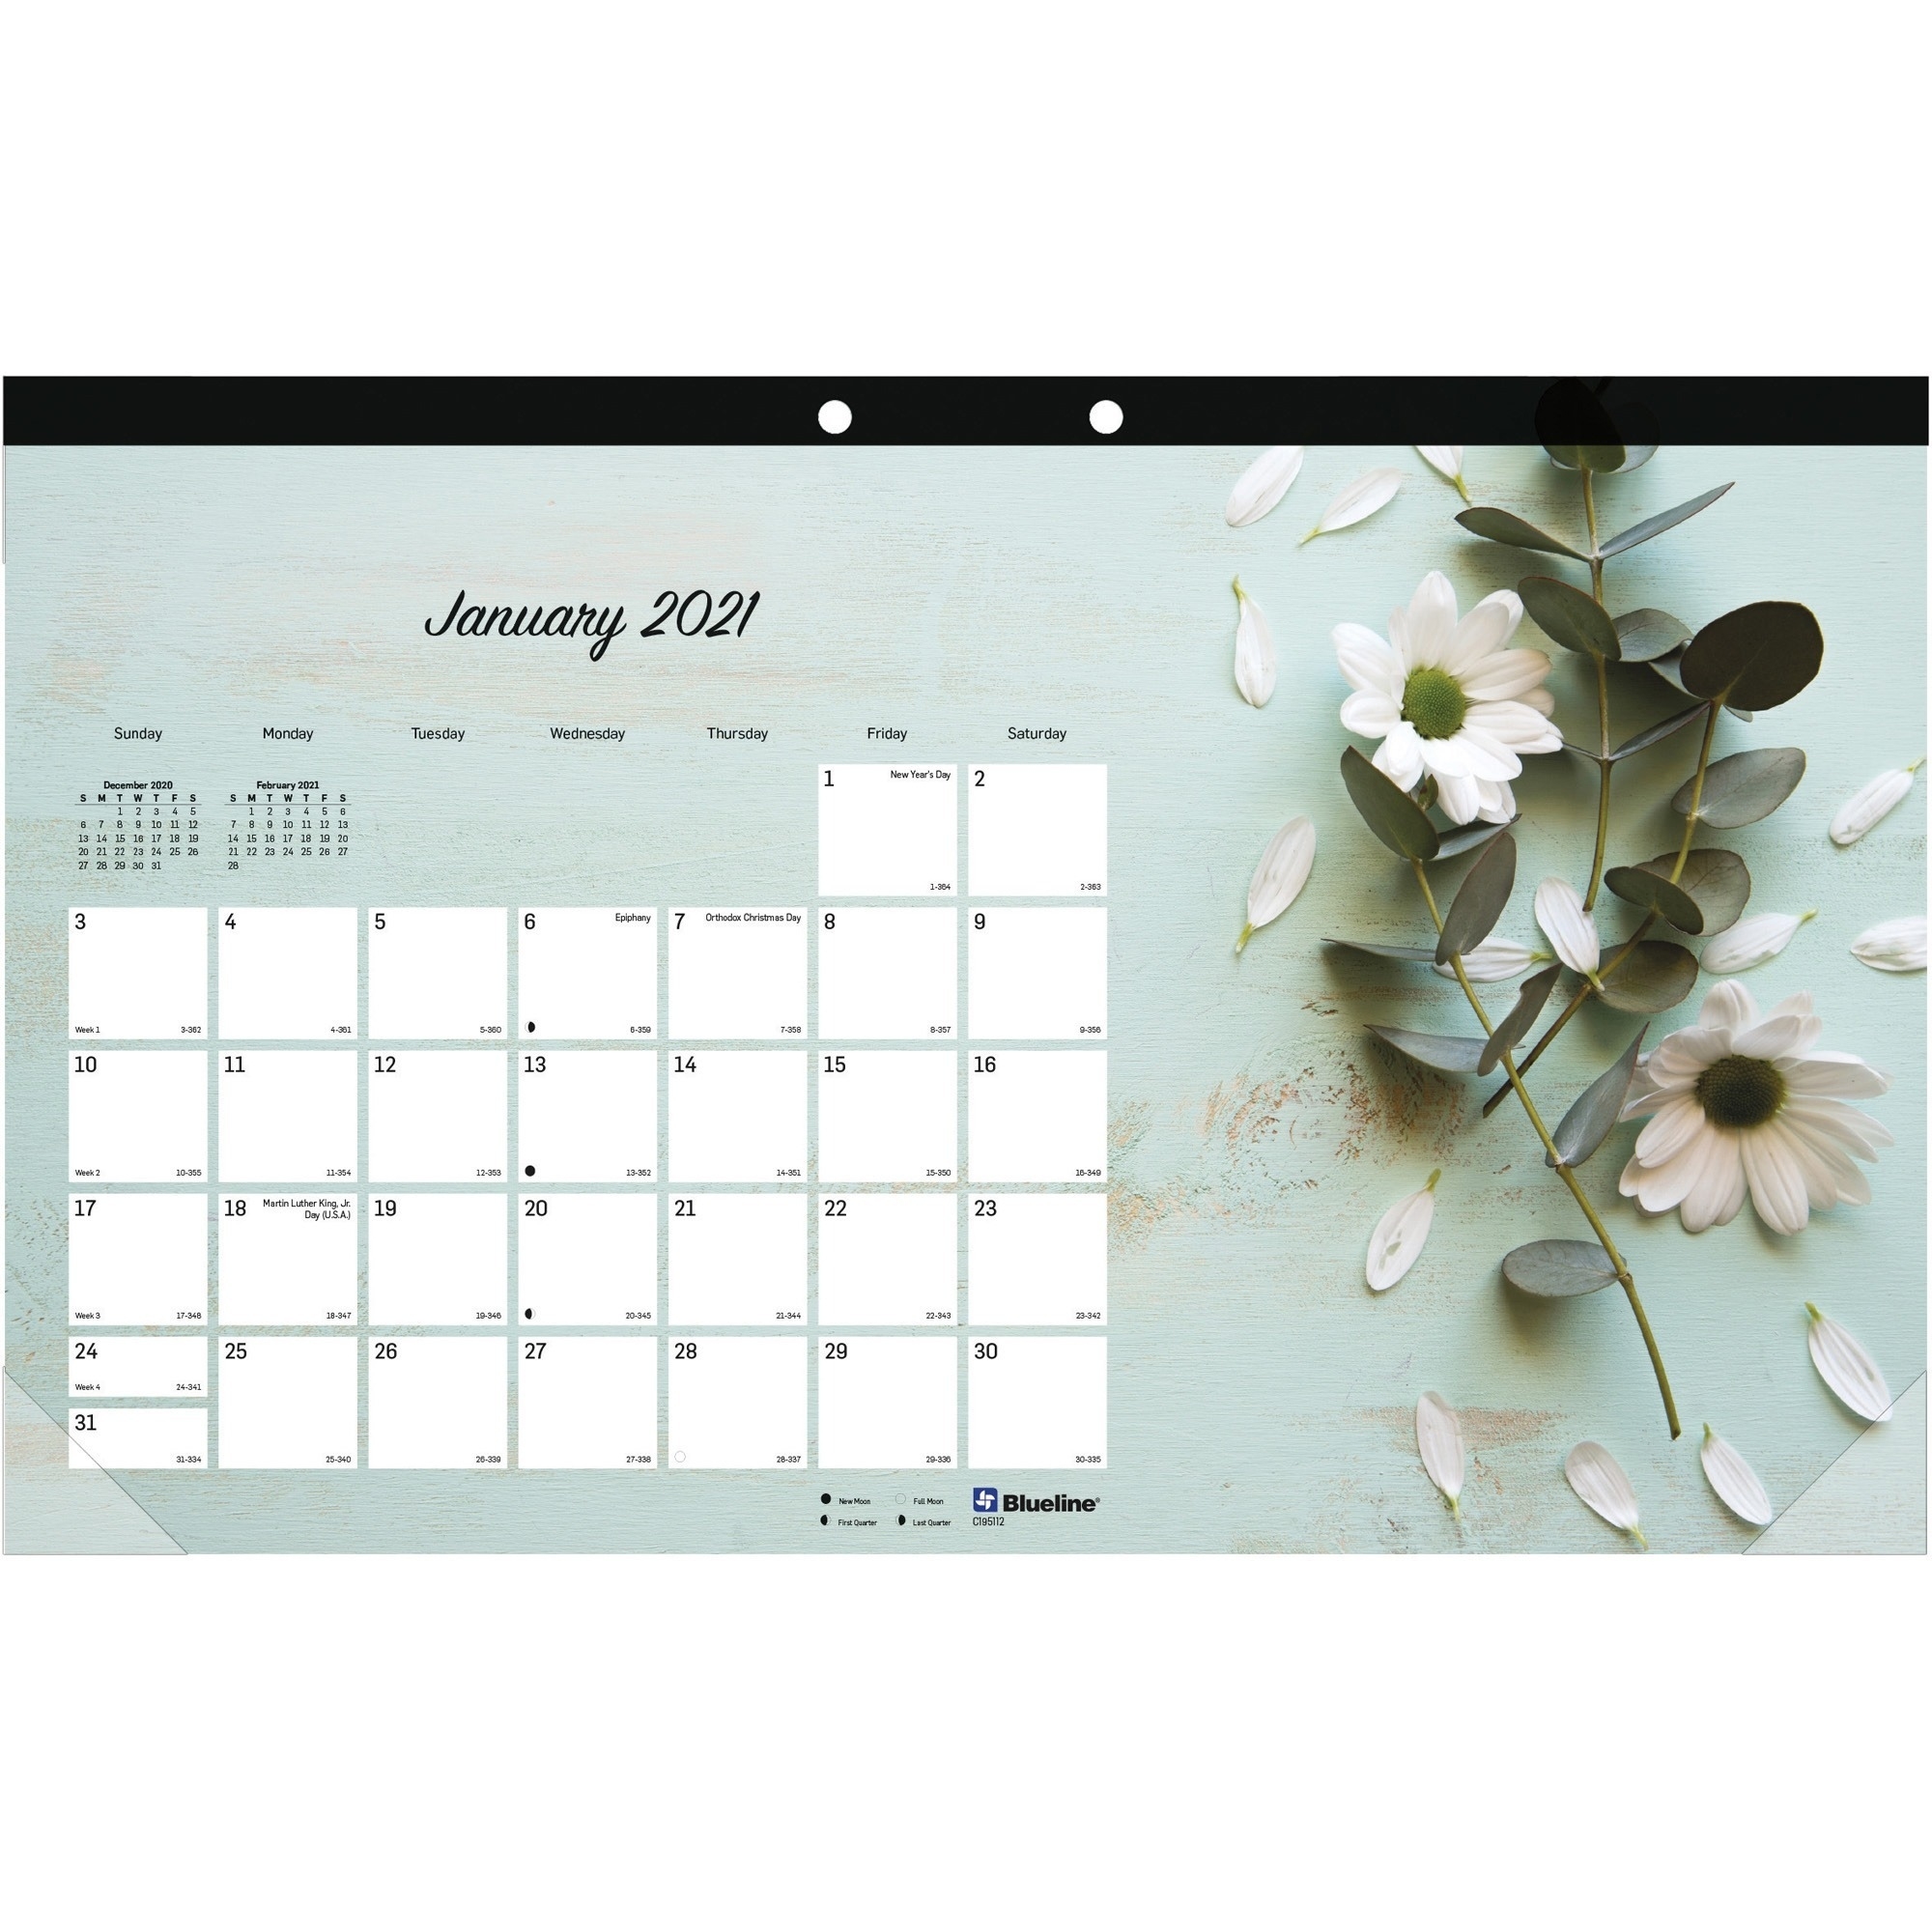 Julian Date Calendar 2021 Converter | Printable Calendar Conver Dec 8 2021 To Julian Date